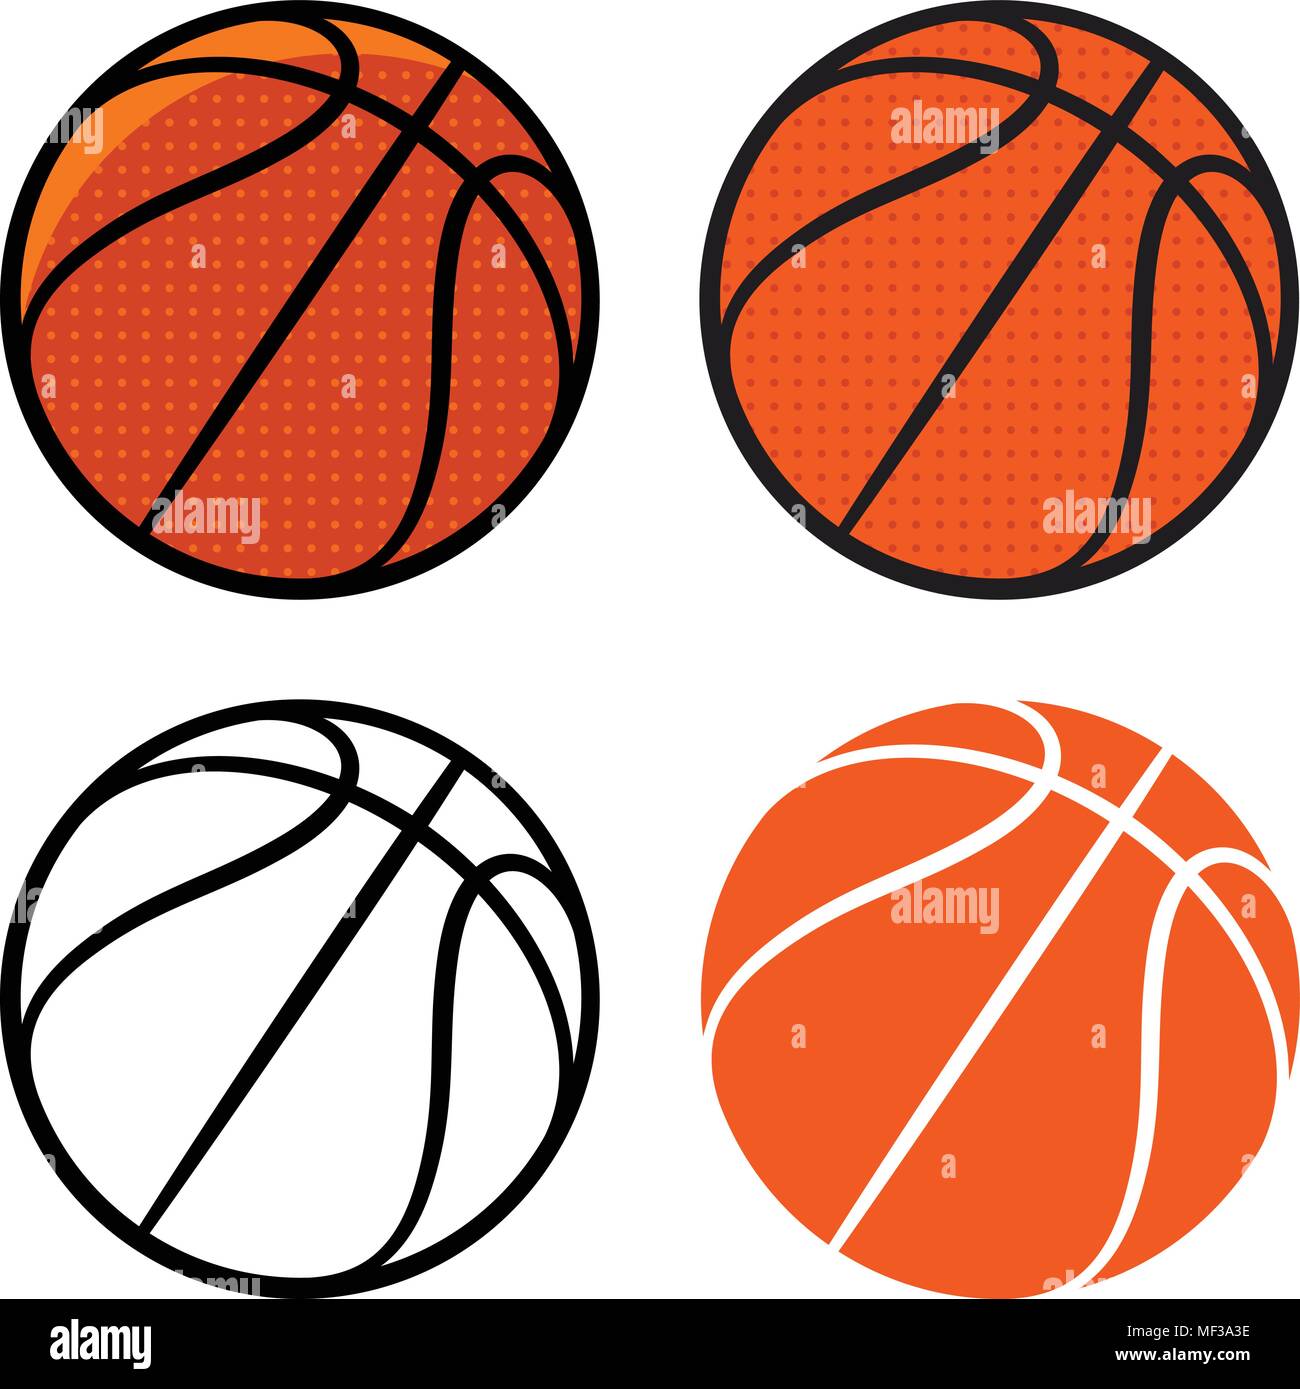 Balon de basquetbol imágenes de stock de arte vectorial